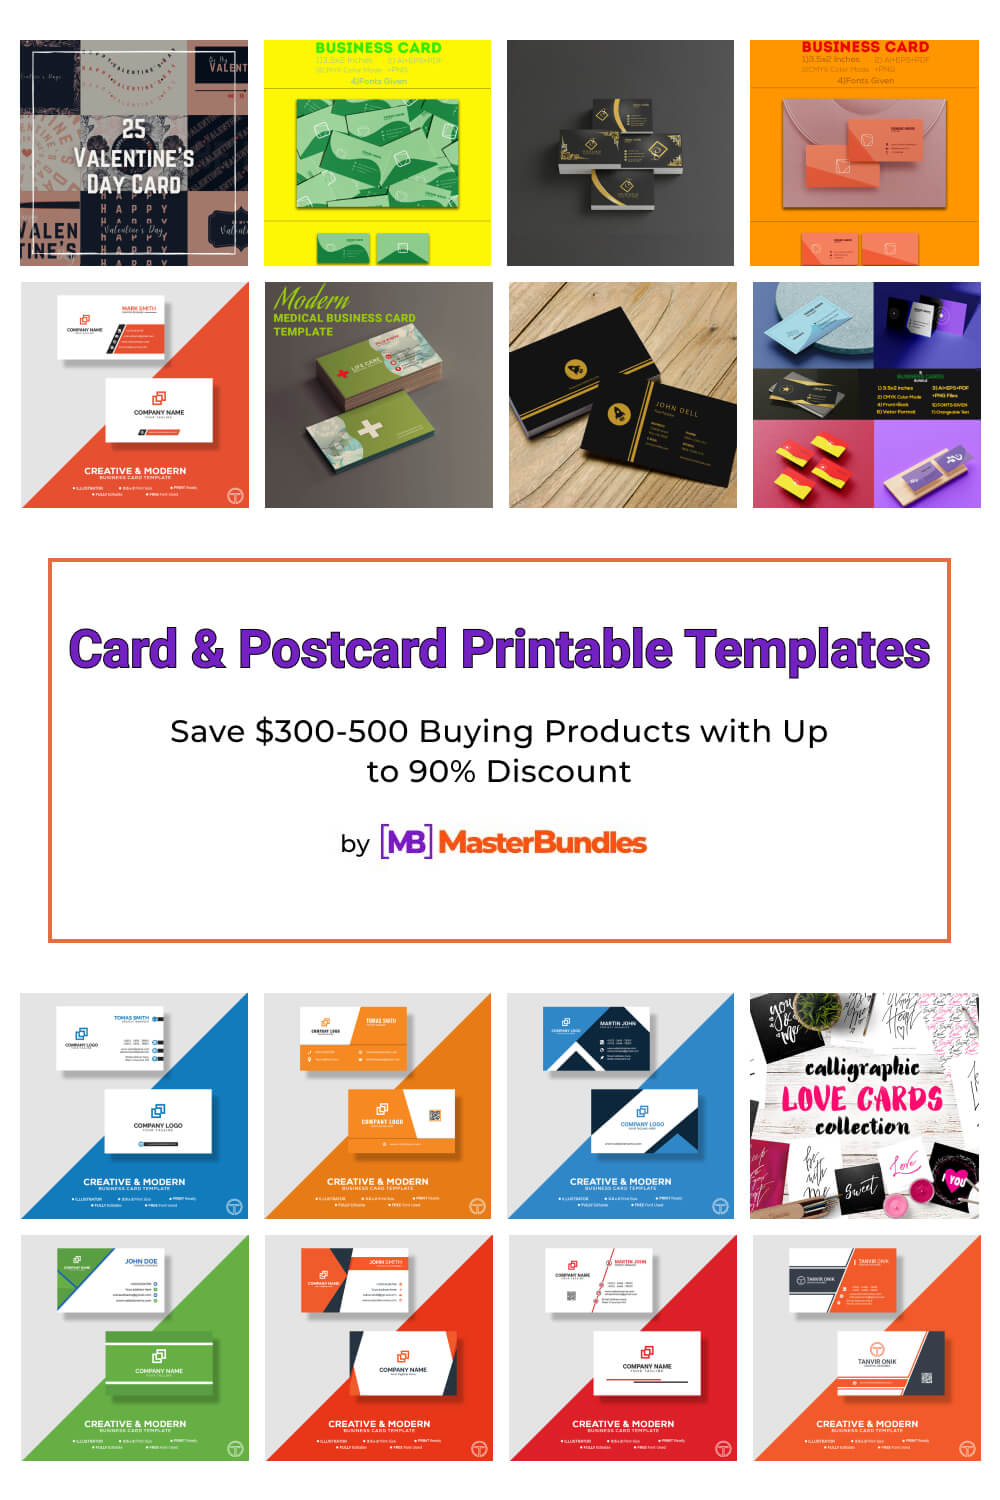 card postcard printable templates pinterest image.